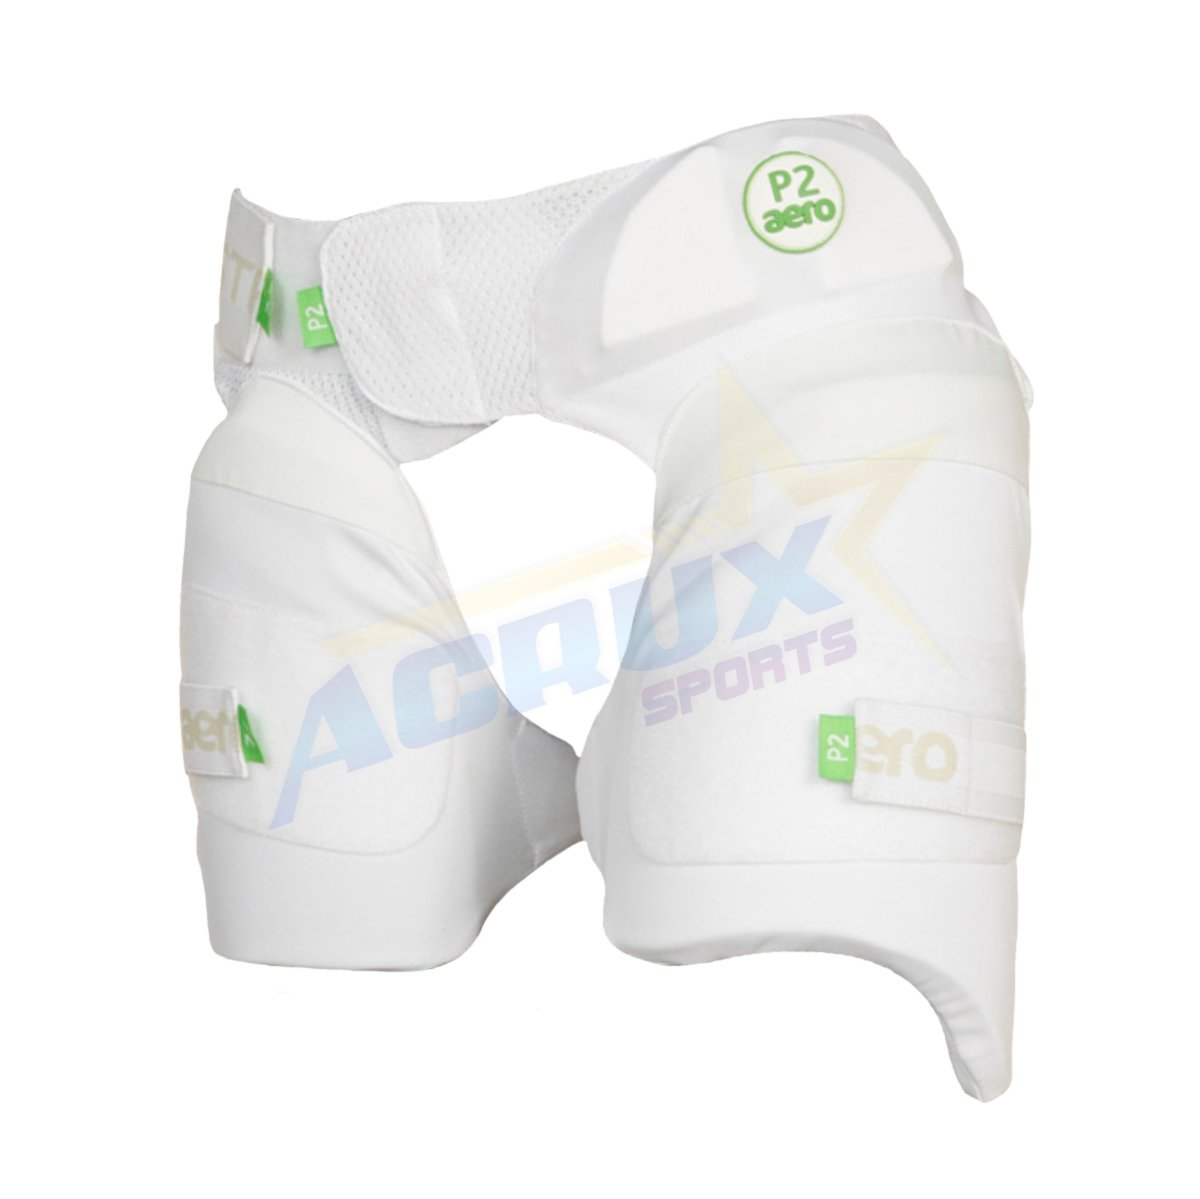 Aero P2 Stripper Protection v7.0 Cricket Thigh Guard